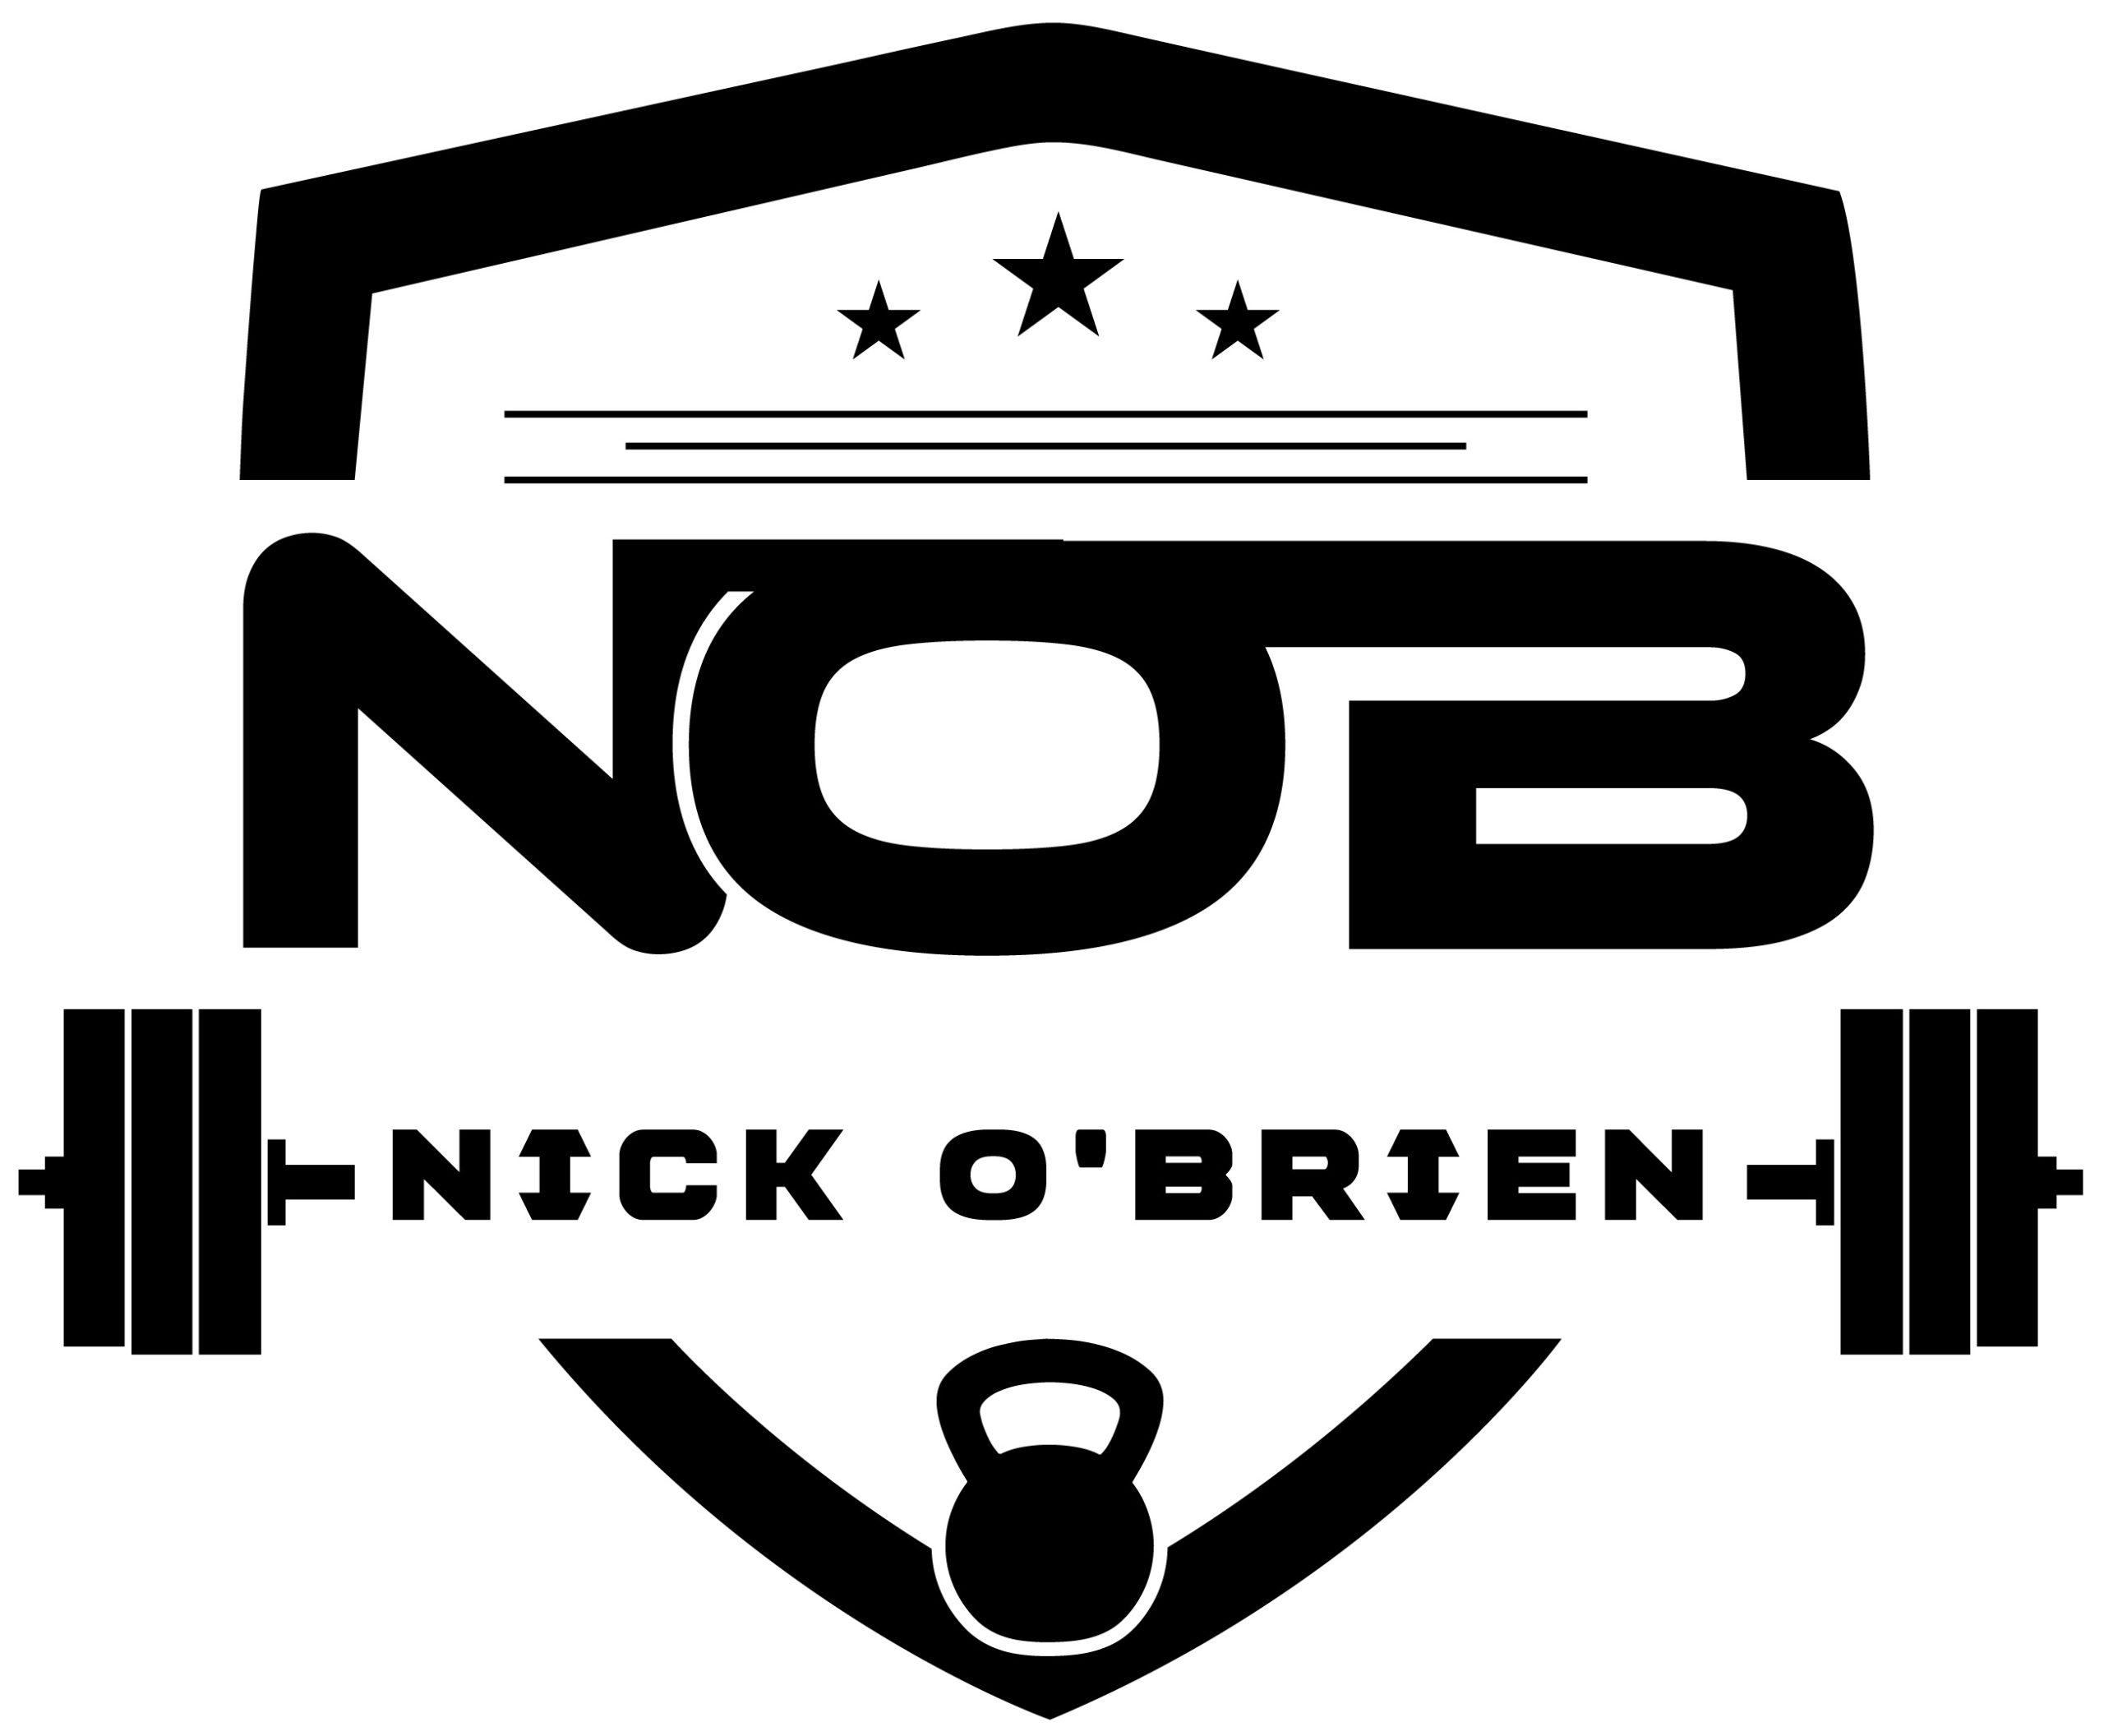 Nick O'Brien